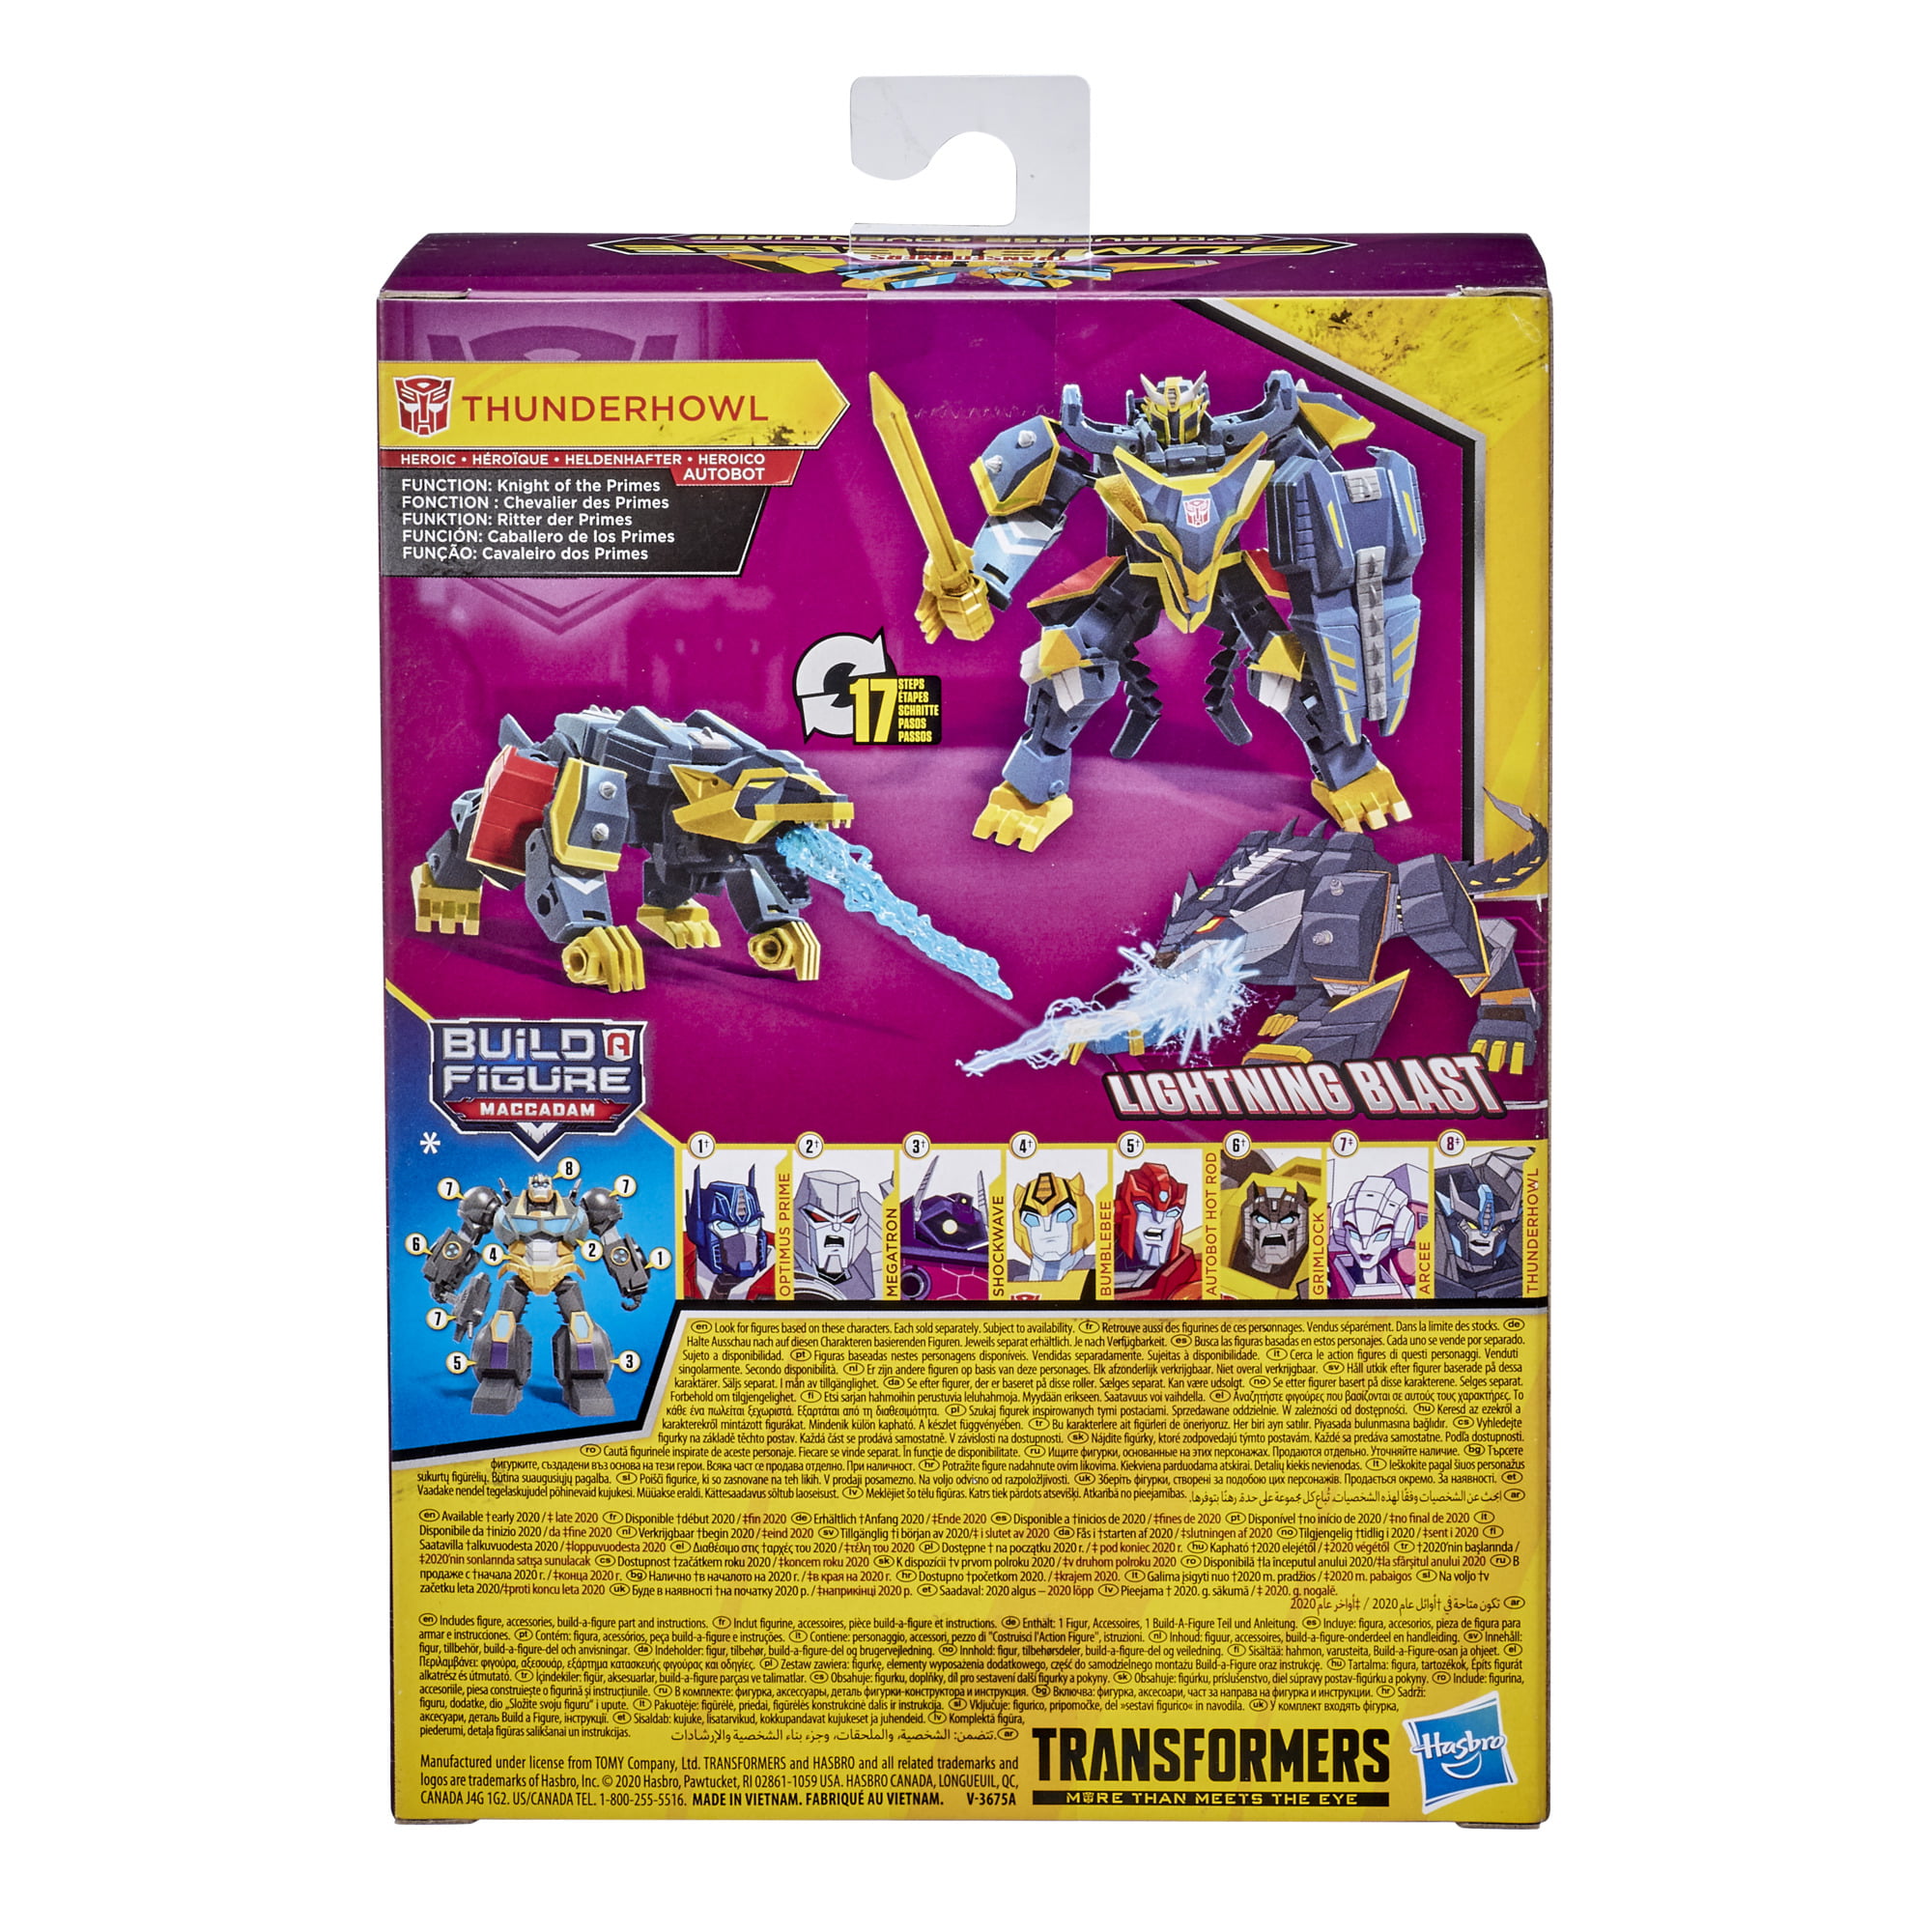 Transformers Bumblebee Cyberverse Adventures Toys Deluxe Thunderhowl Figure